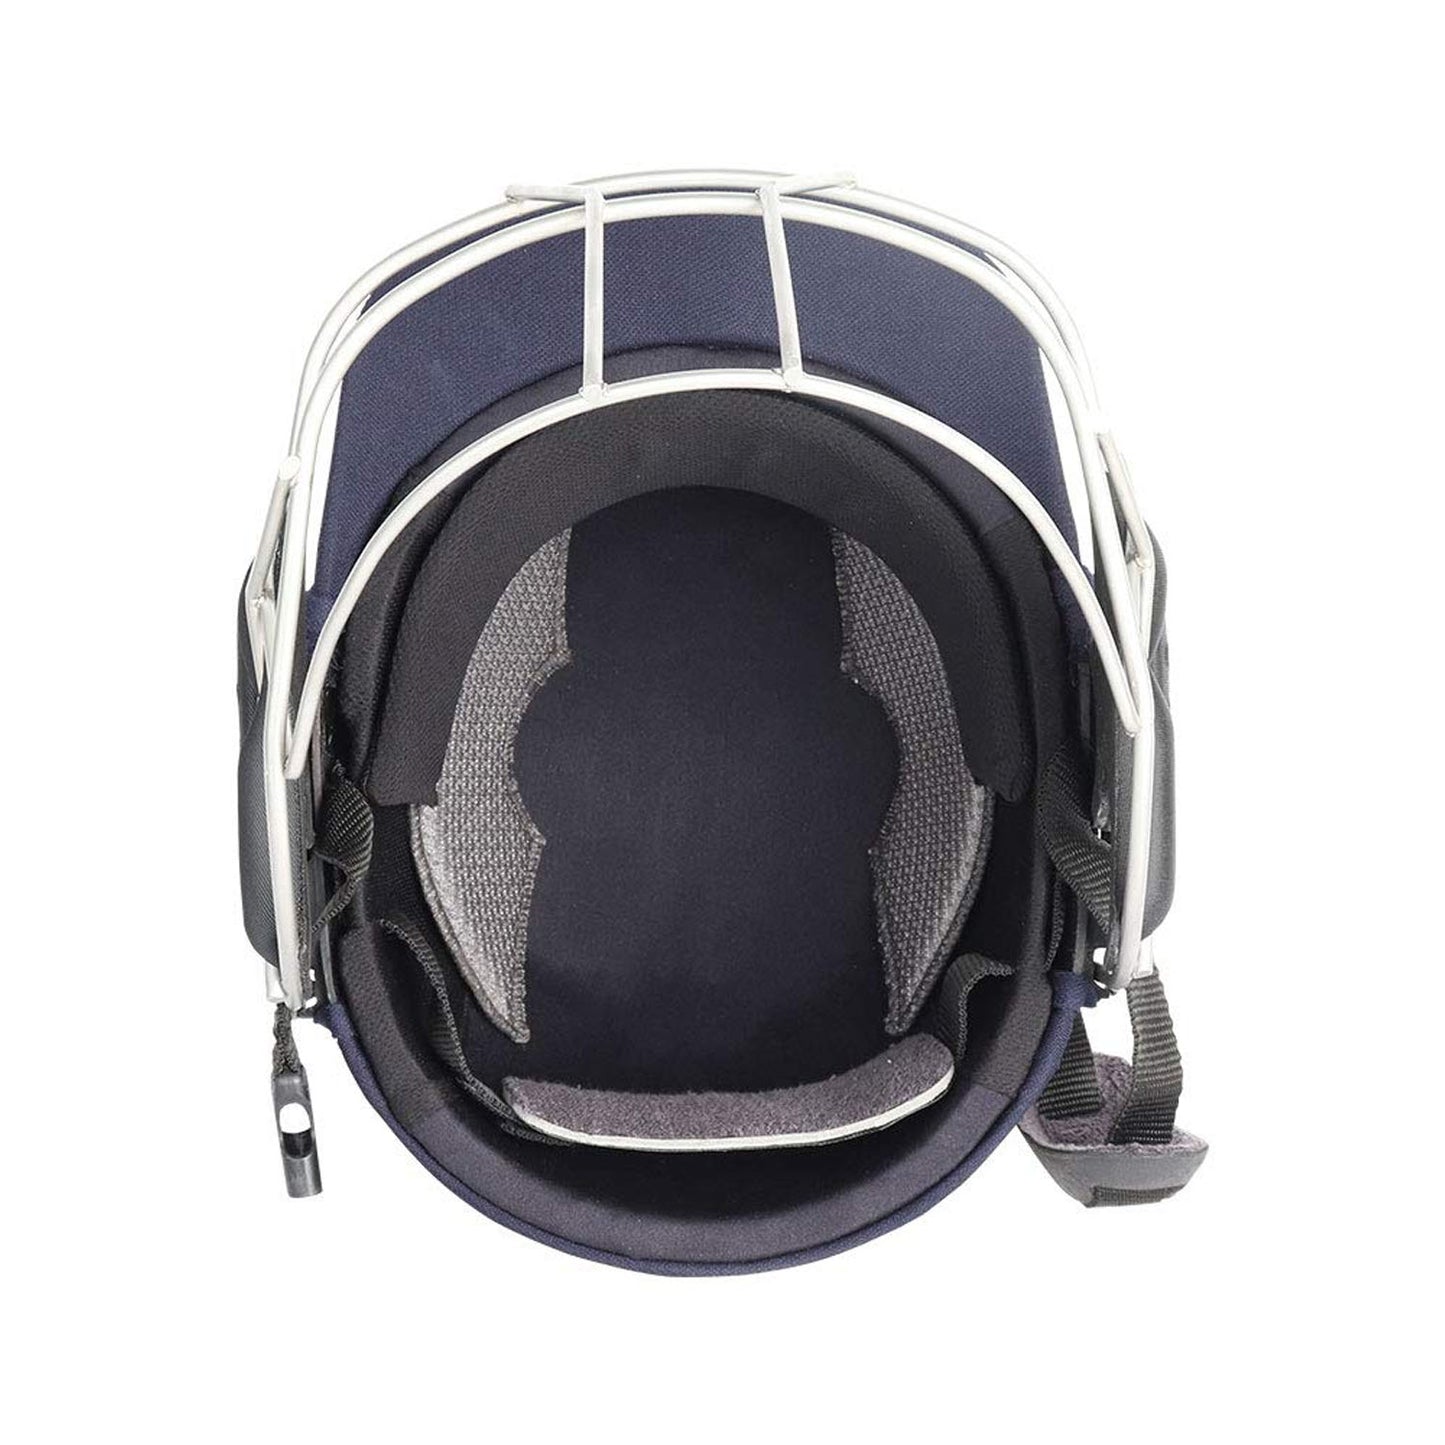 Shrey Master Class Air Titanium Visor H011 Cricket Helmet, Navy - Best Price online Prokicksports.com